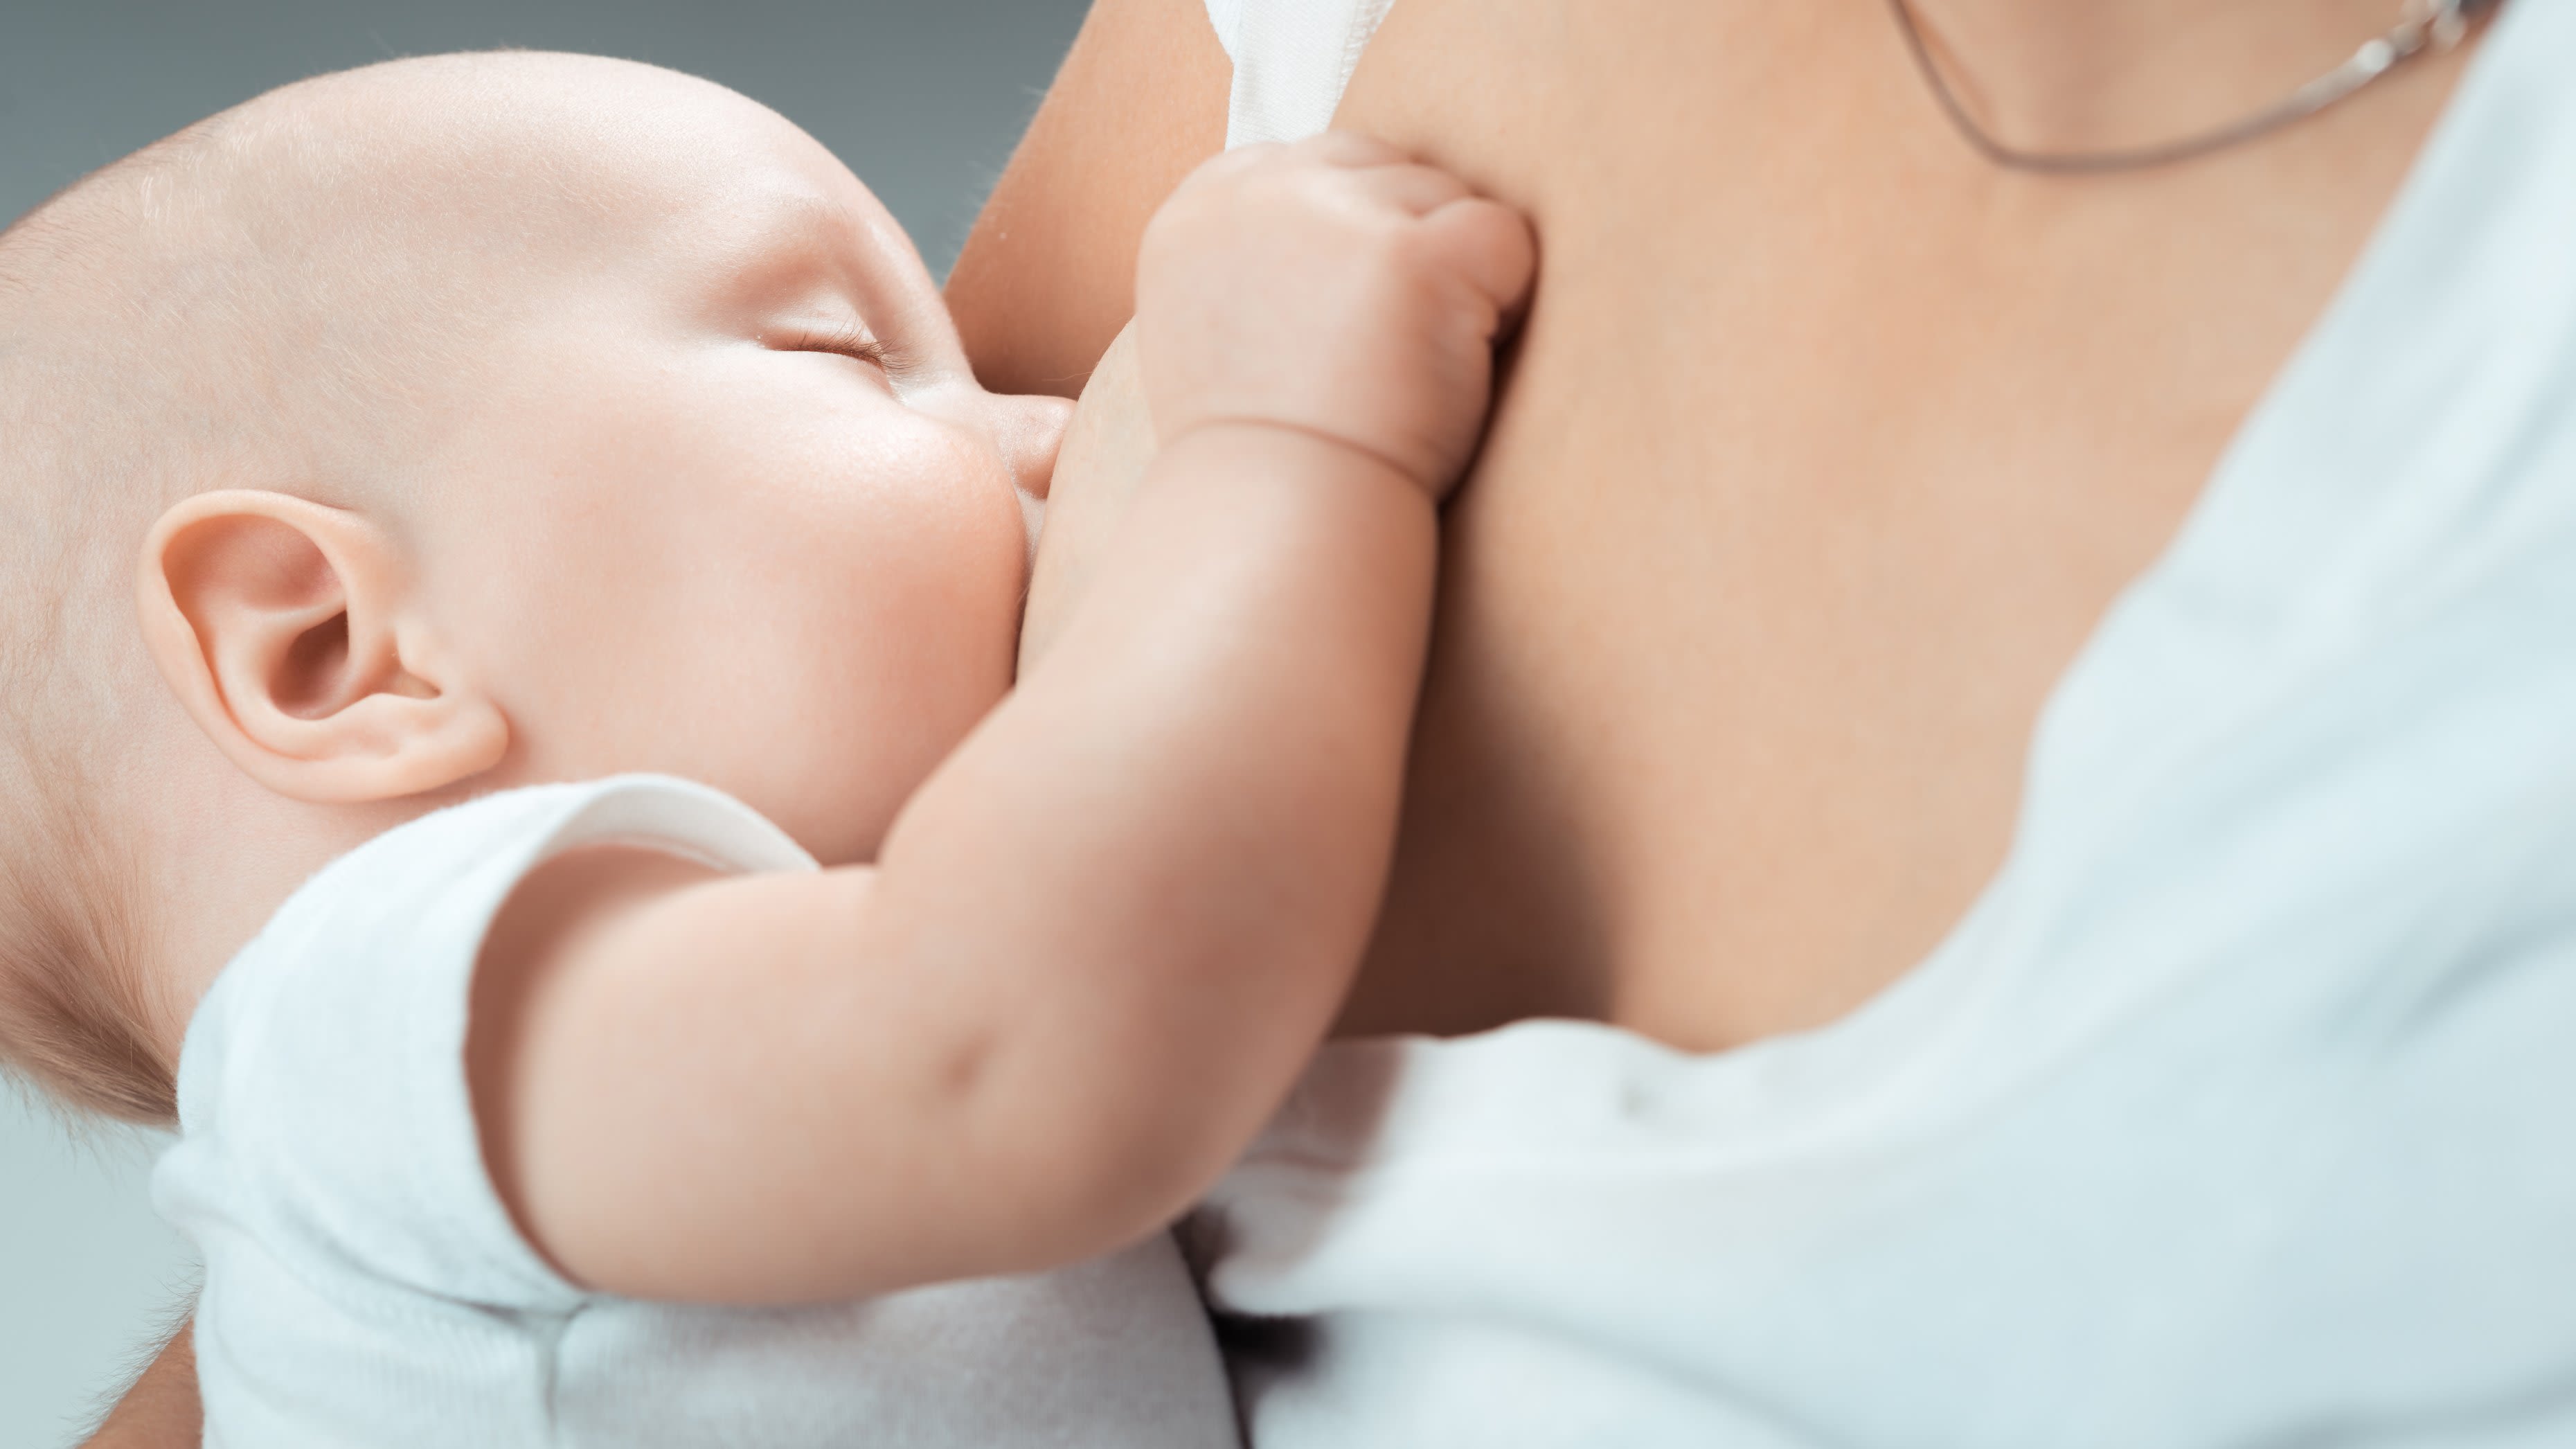 https://media.cnn.com/api/v1/images/stellar/prod/150126105108-breastfeeding-stock.jpg?q=w_3720,h_2092,x_0,y_0,c_fill